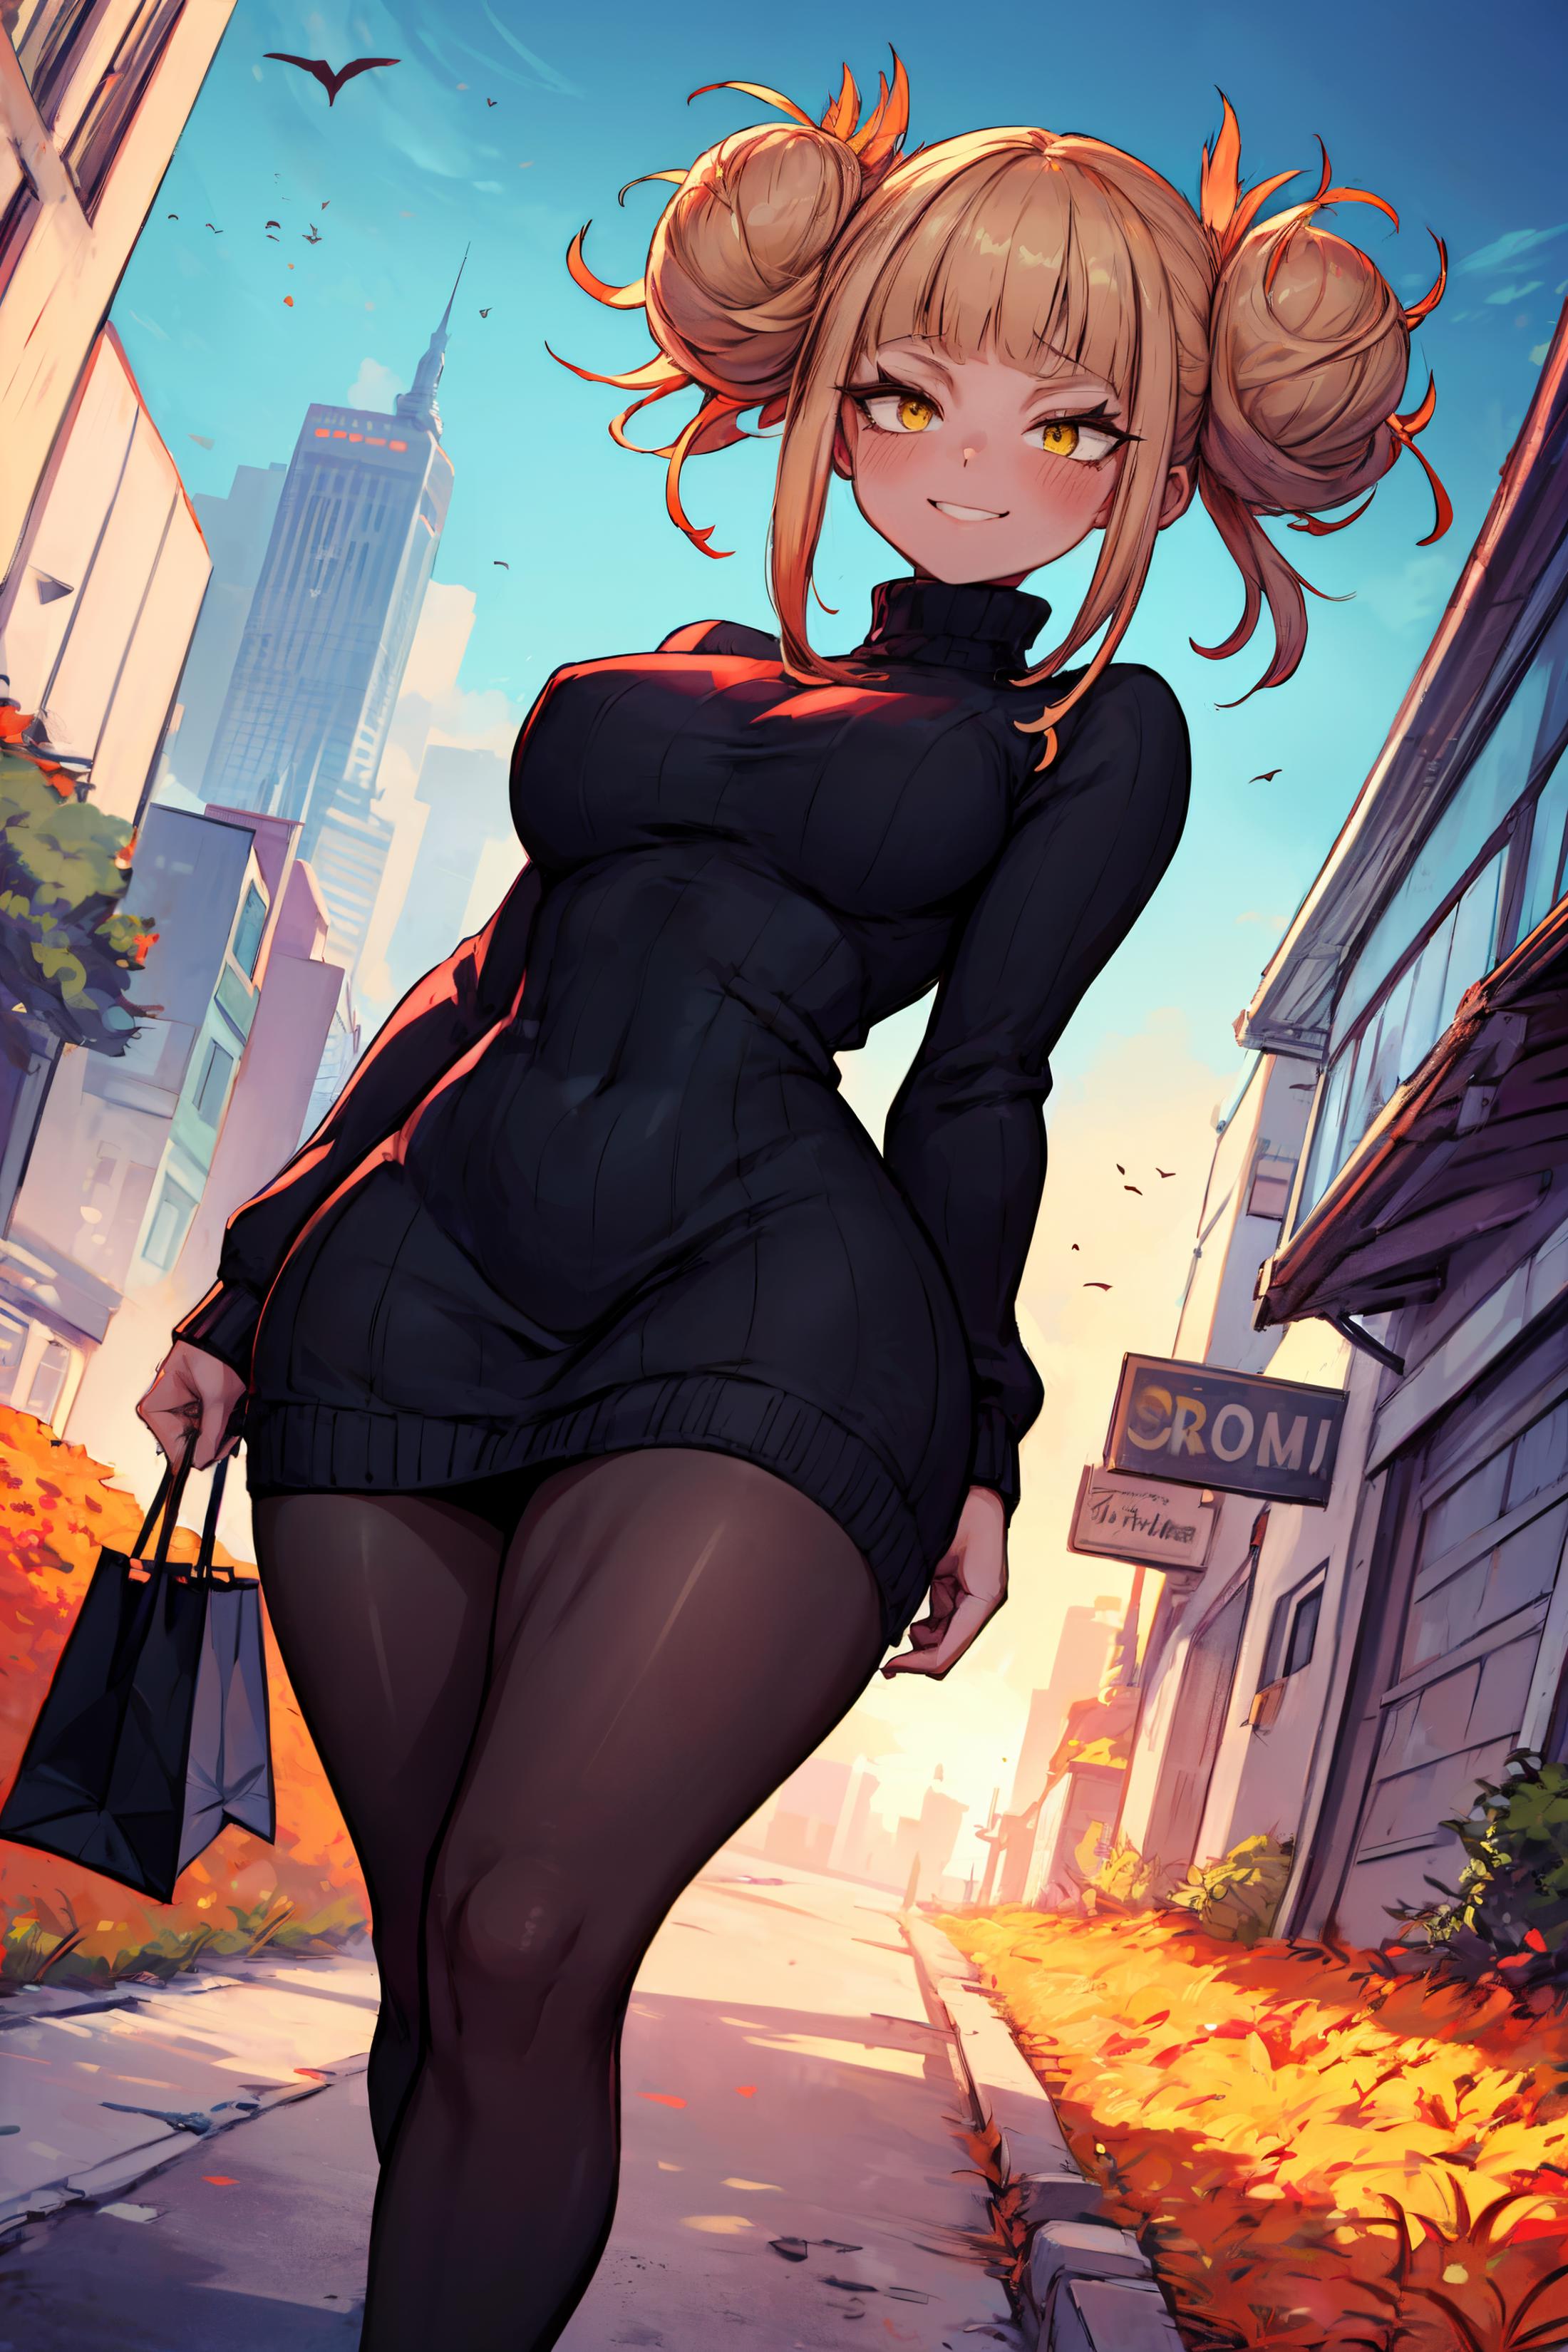 A cartoon woman wearing a black shirt and tights walks down a city street.